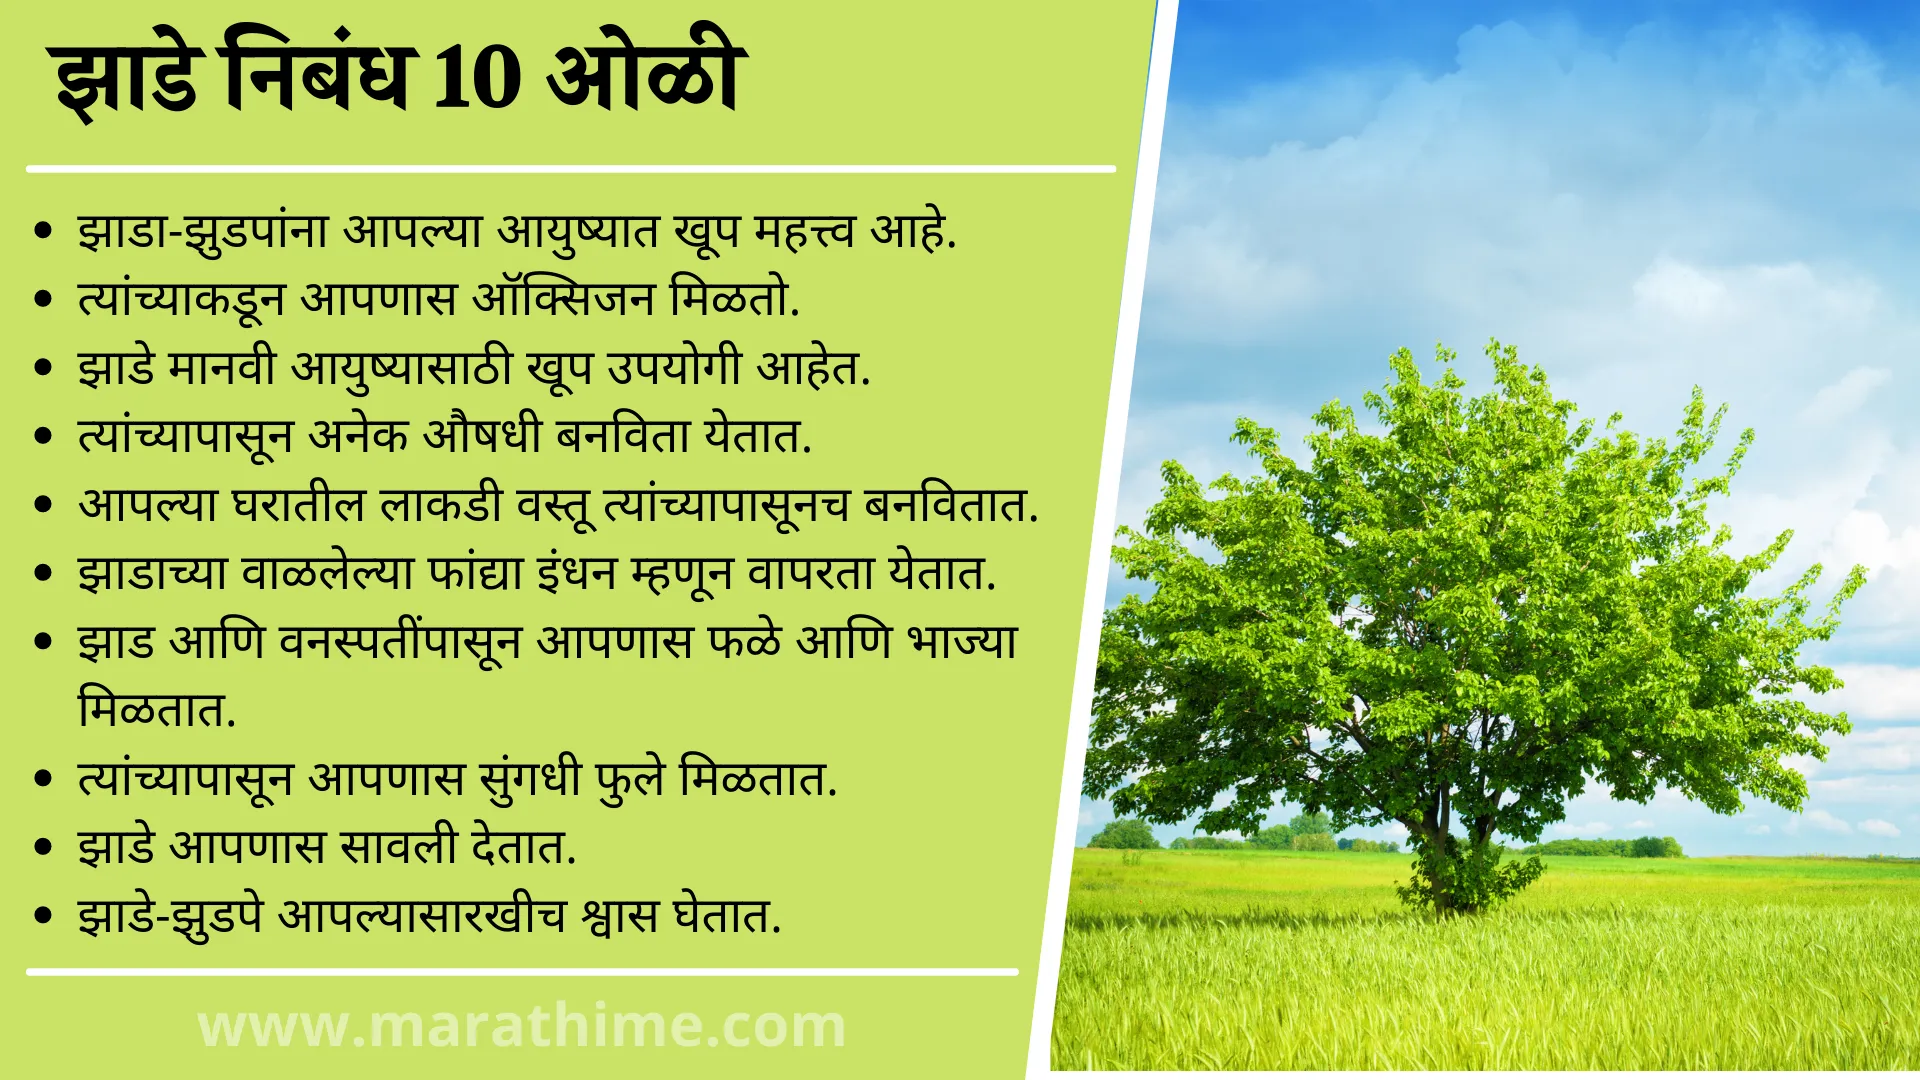 झाडे निबंध 10 ओळी, 10 Lines On Tree in Marathi